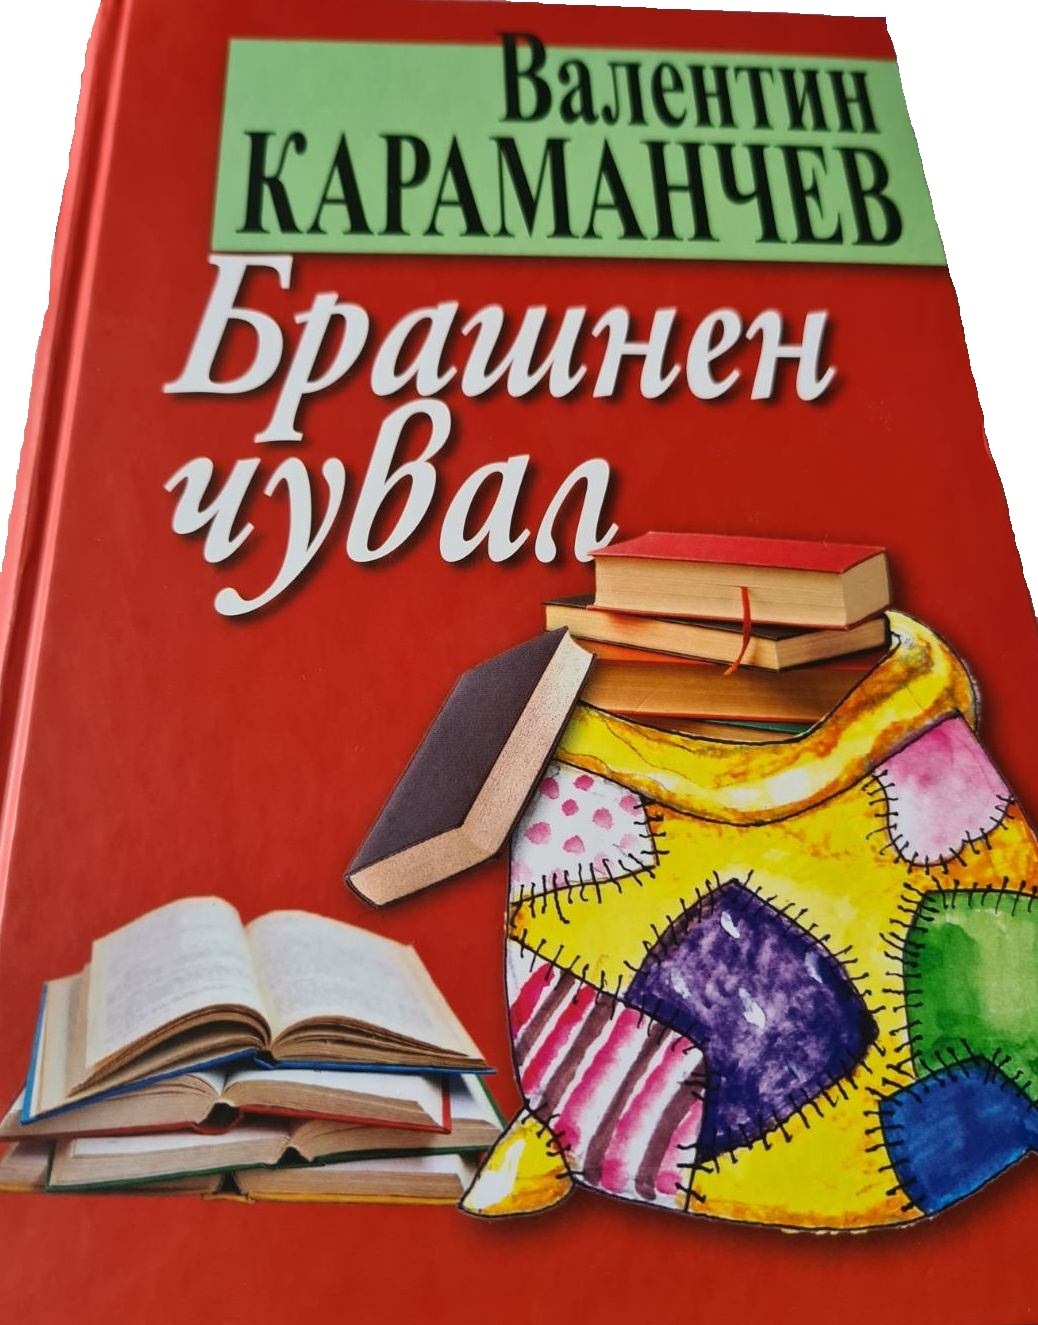 https://toppresa.com/wp-content/uploads/2020/11/Karamanchev.jpg